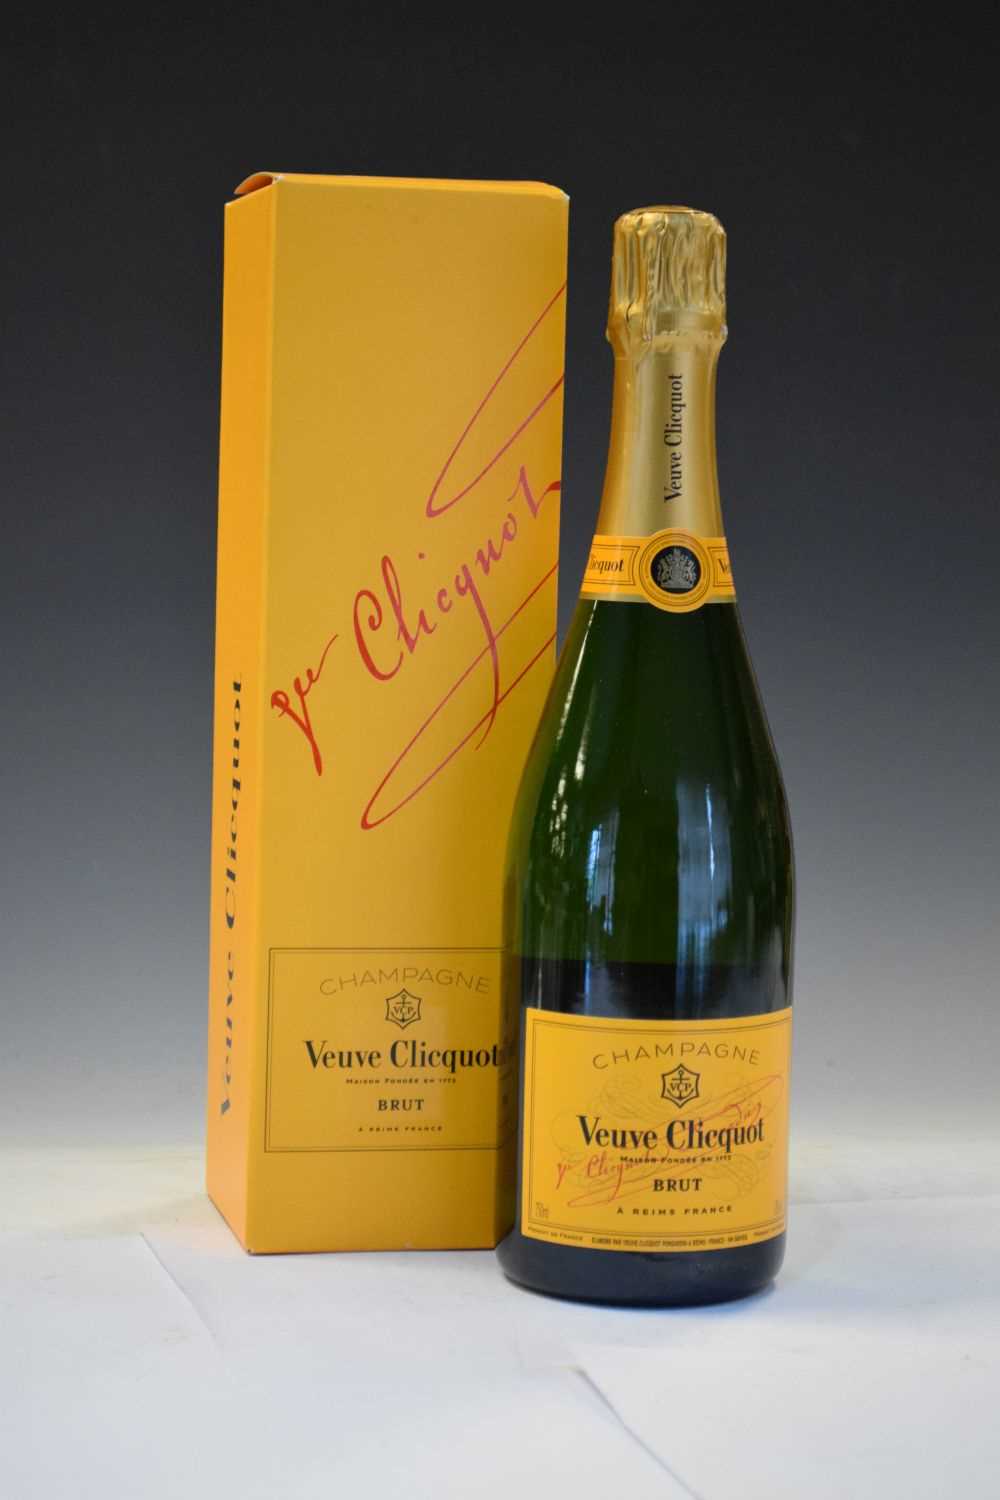 Wine - Bottle of Veuve Clicquot Brut Champagne - Image 2 of 5